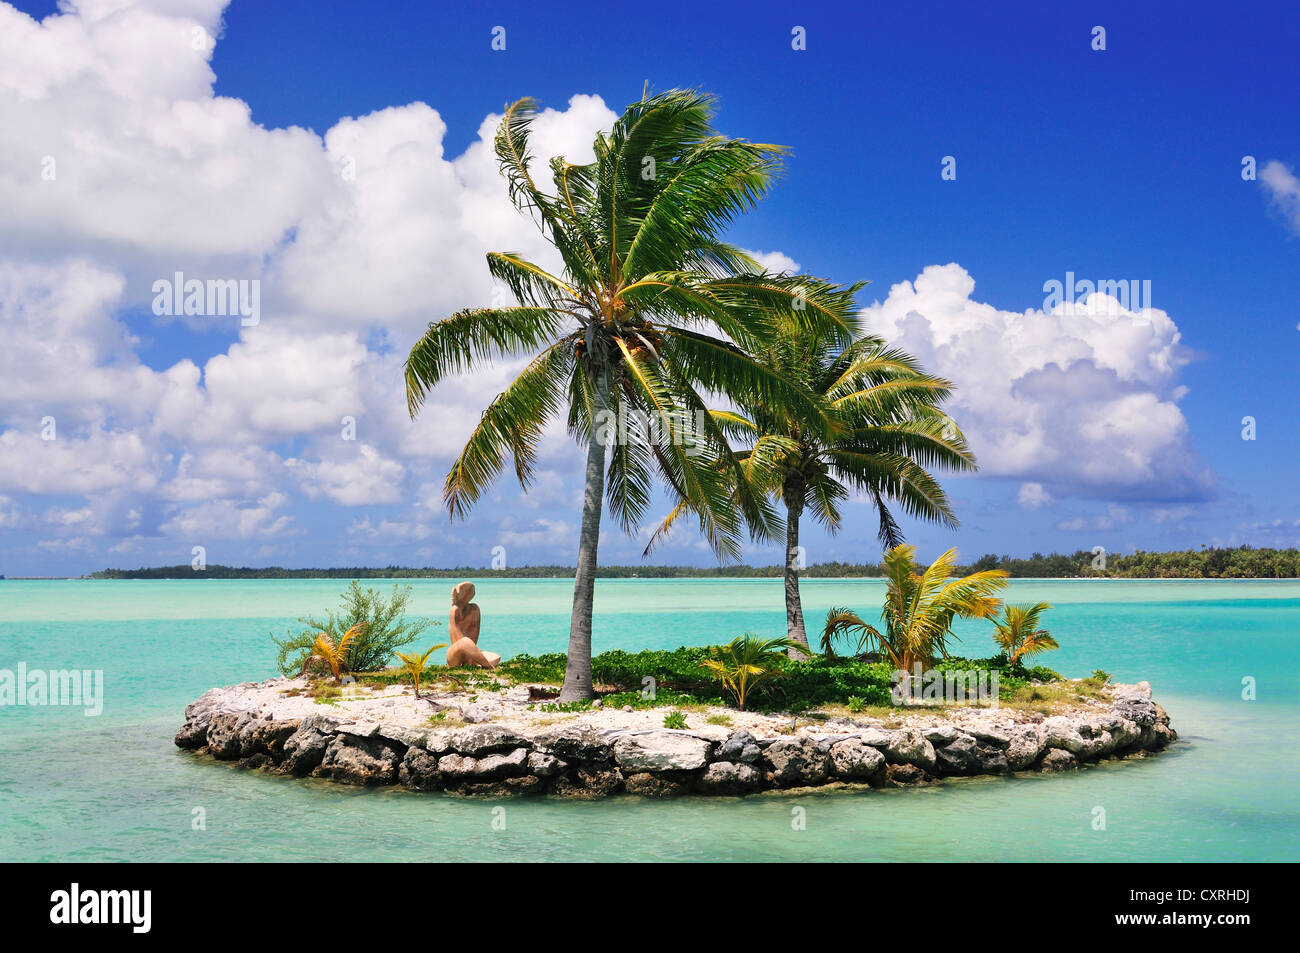 Small island with palm trees, Bora Bora, Leeward Islands, Society Islands, French Polynesia, Pacific Ocean Stock Photo